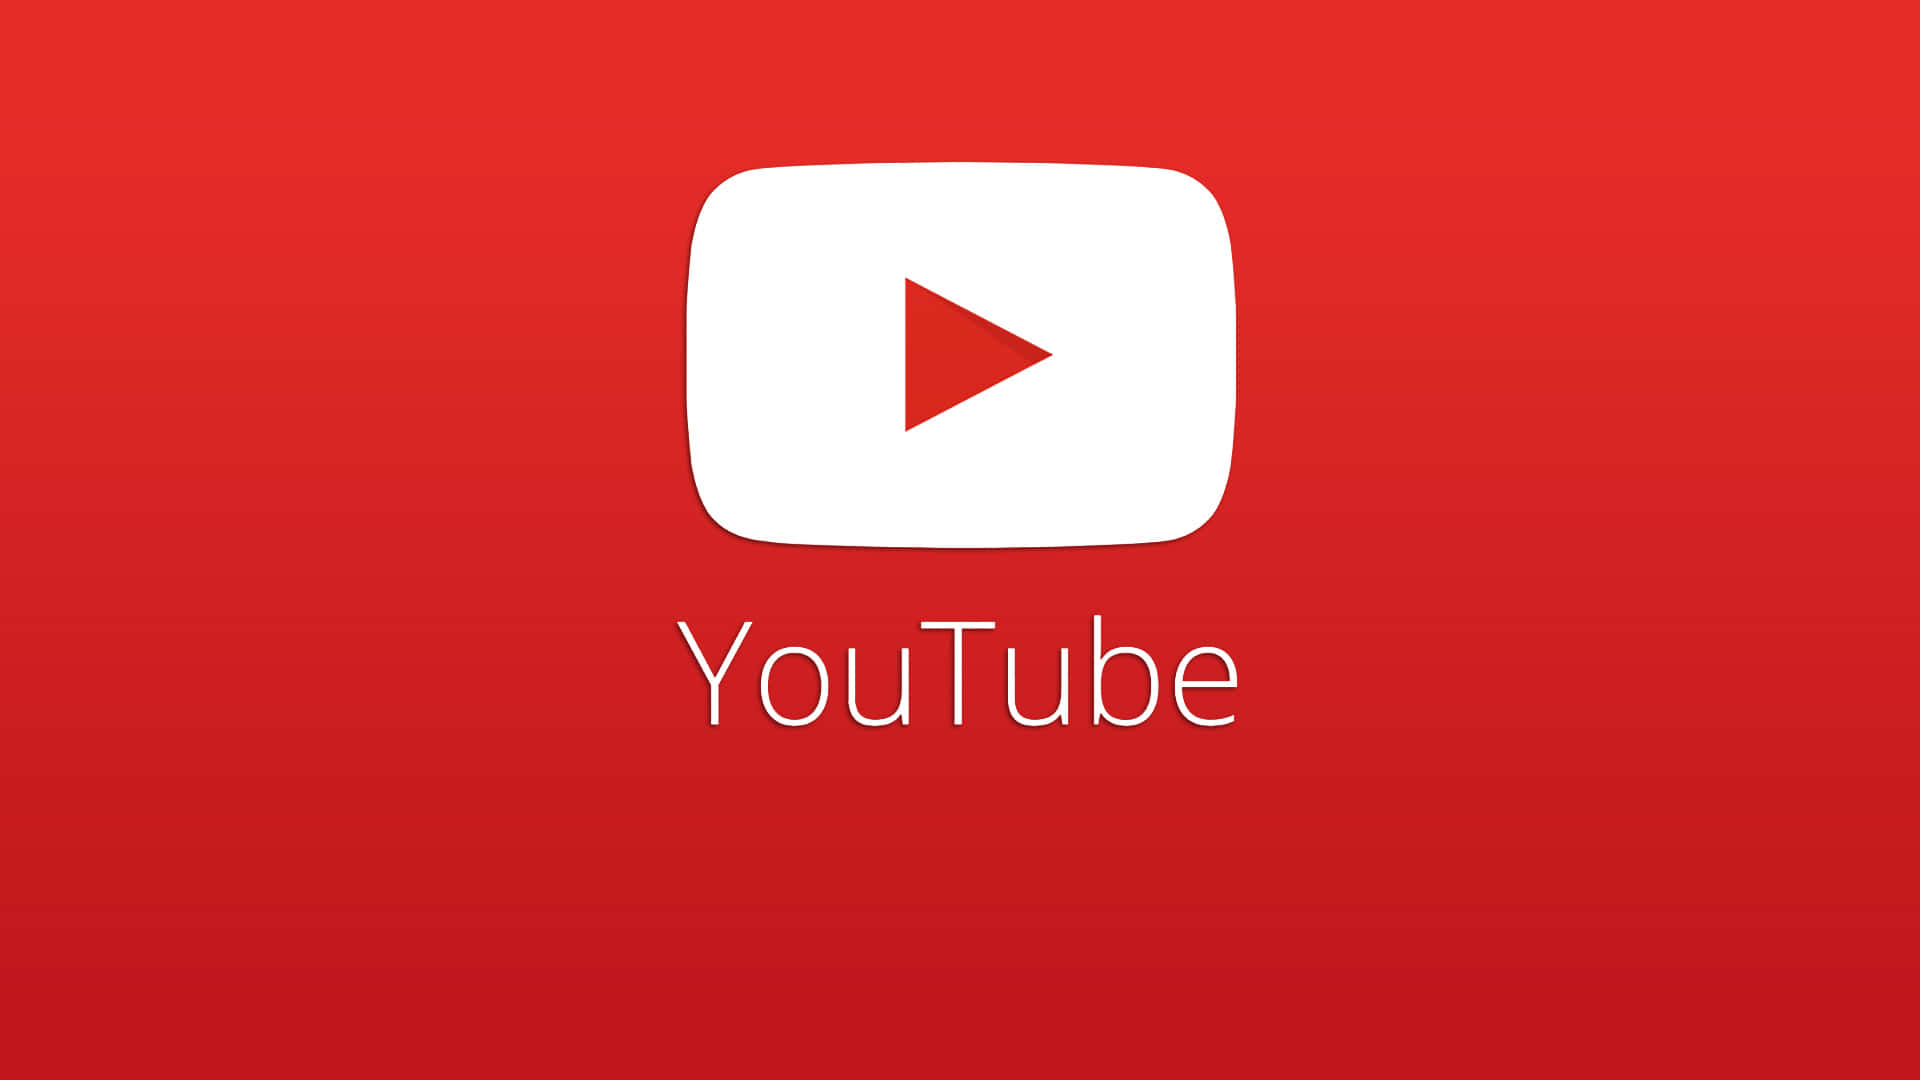 Logodi Youtube Vivace Su Sfondo Scuro